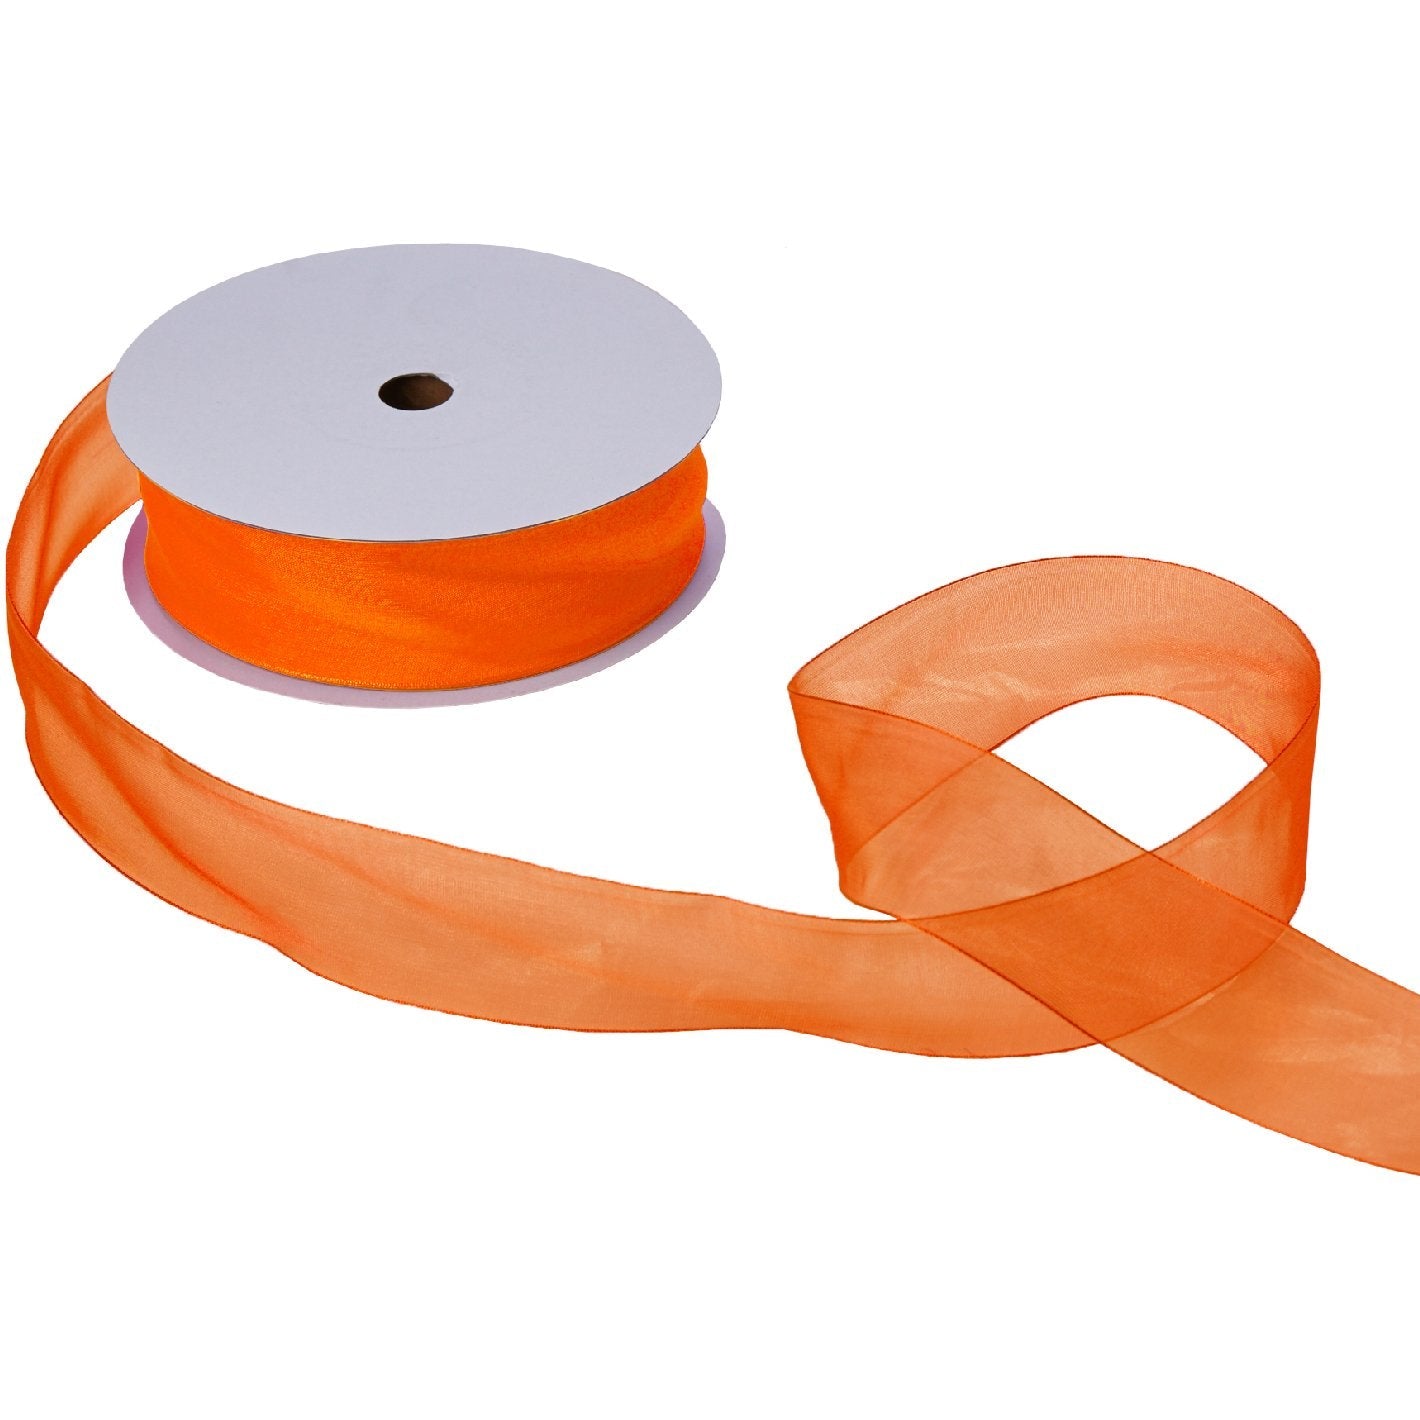 Jillson & Roberts Organdy Sheer Ribbon, 1 1/2" Wide x 100 Yards, Orange